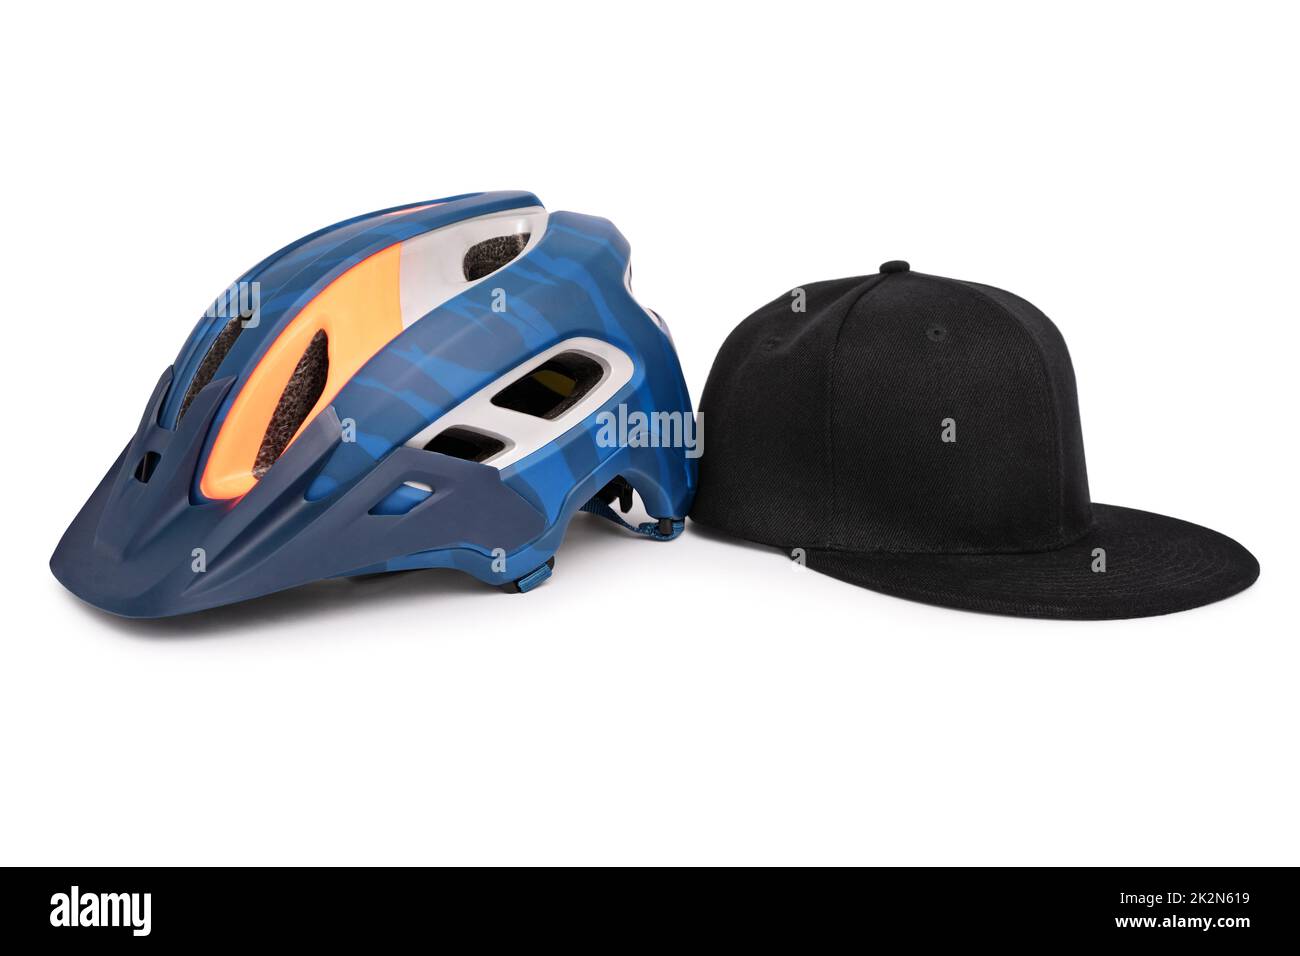 Bike helmet and a baseball snapback hat side by side Stock Photo